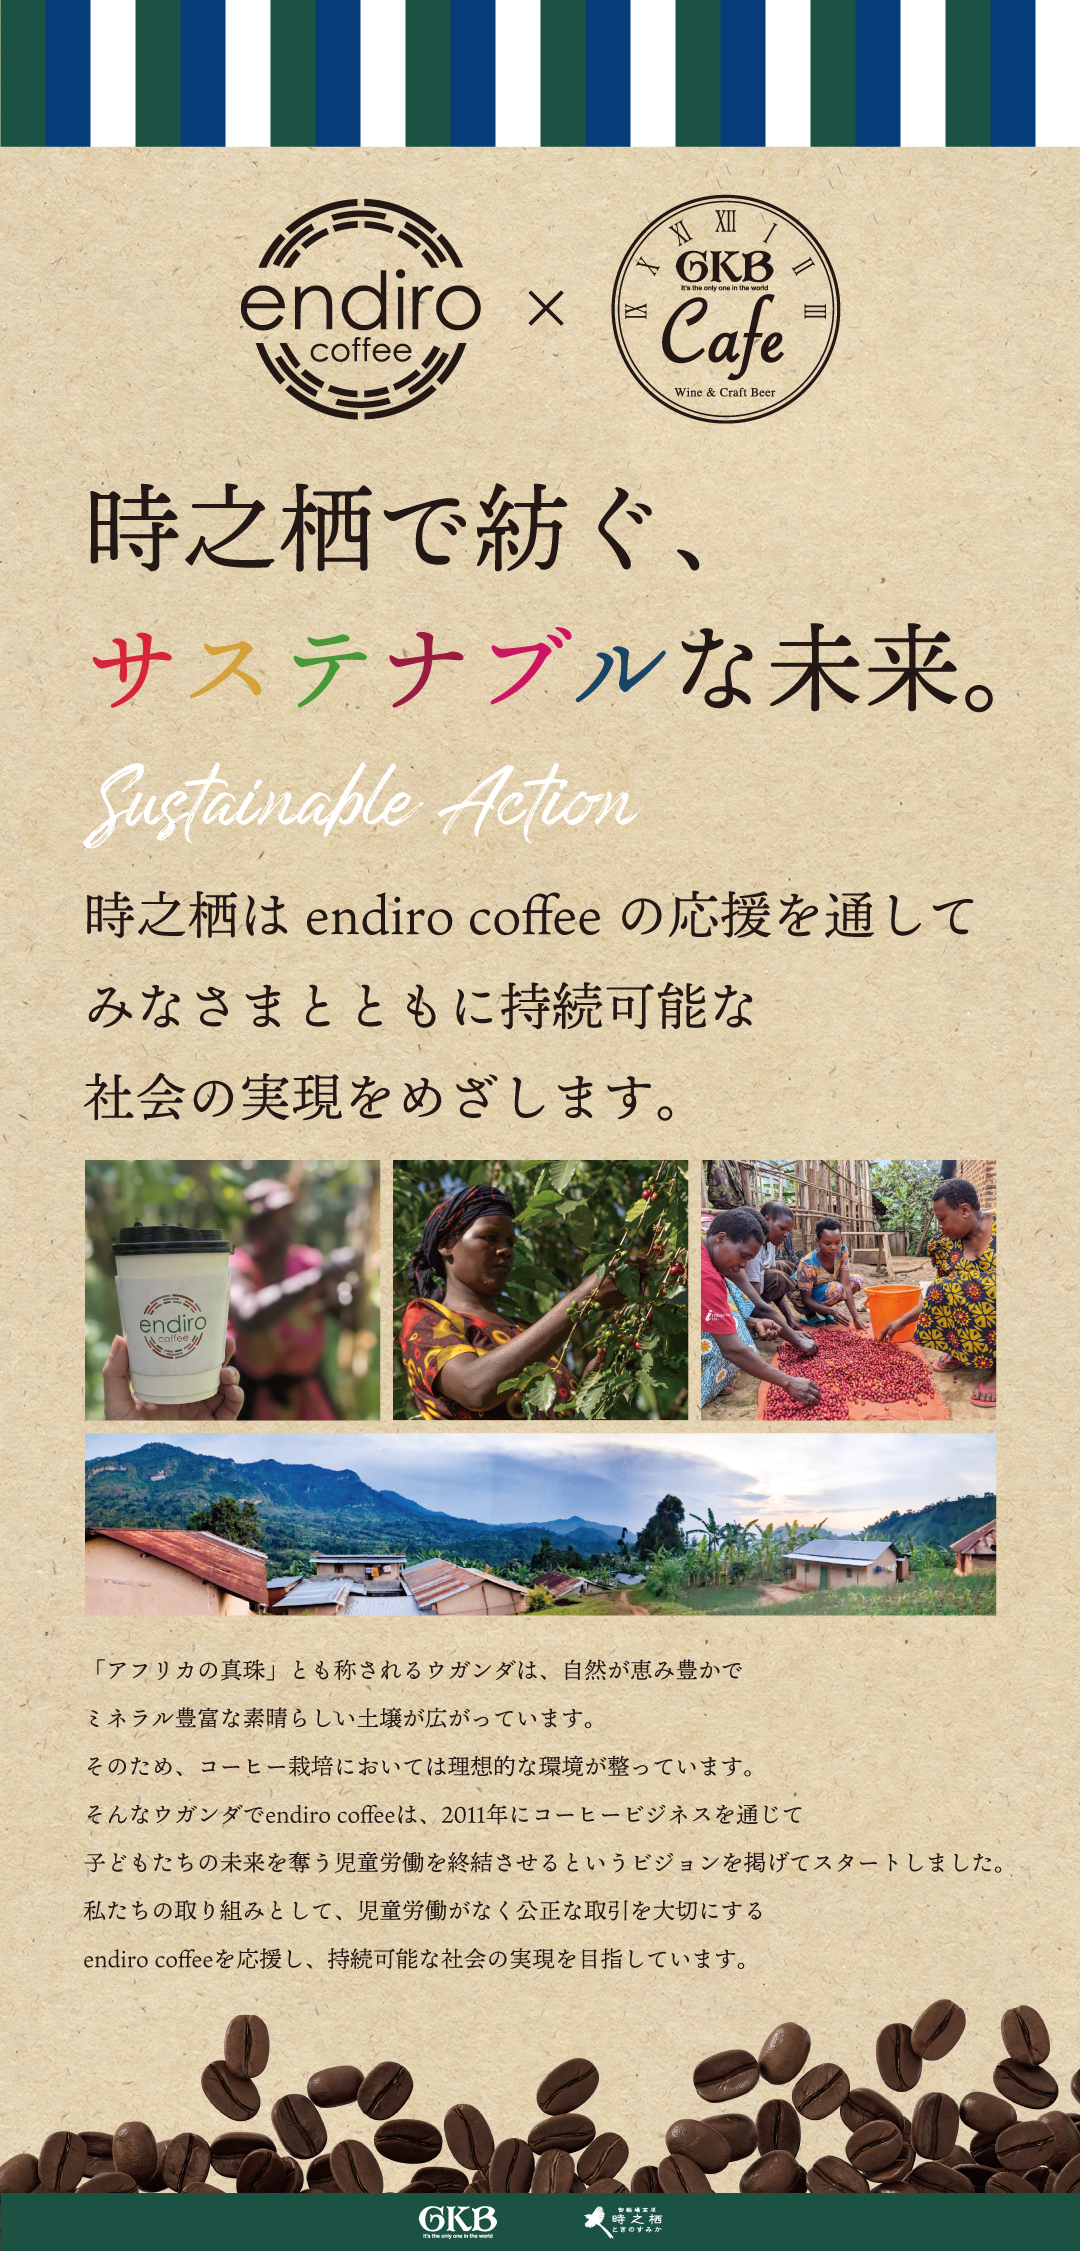 【GKB Cafe】endiro coffee × 時之栖 コラボレーション02